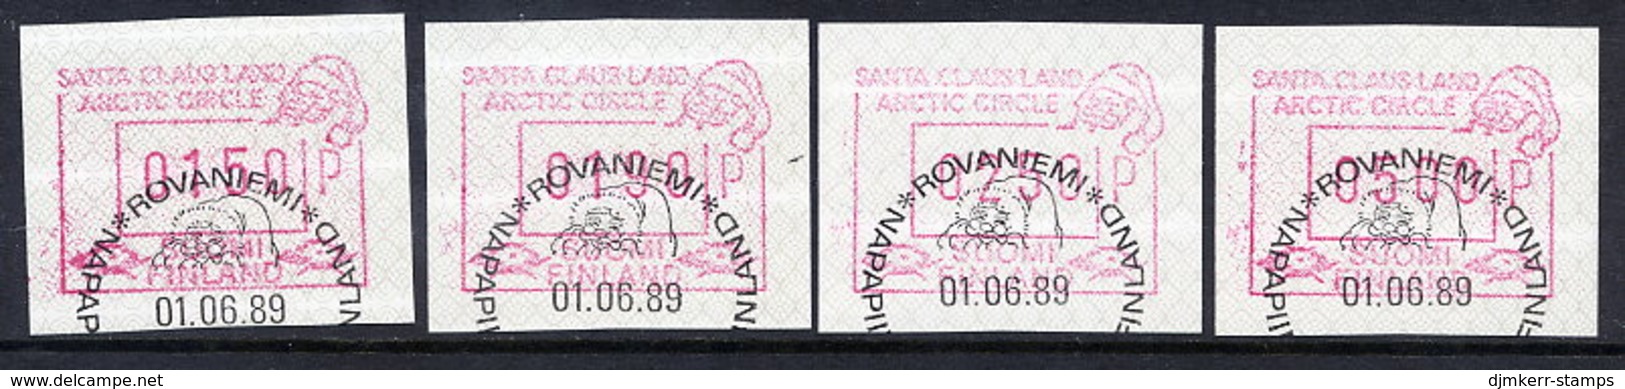 FINLAND 1989 Santa Claus Land , 4 Different Values Used .Michel 6 - Viñetas De Franqueo [ATM]